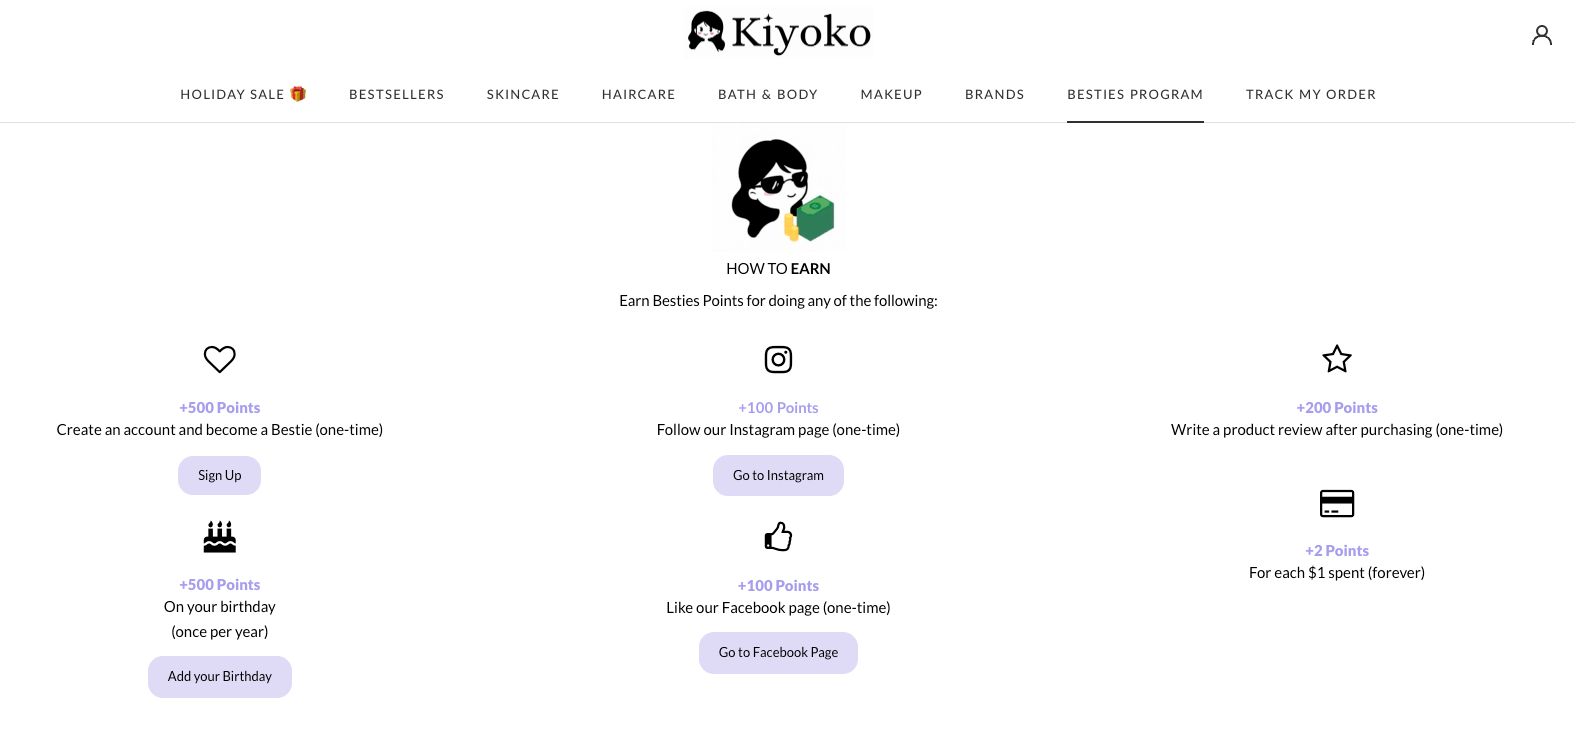 A screenshot from Kiyoko Beauty’s Besties loyalty program explainer page showing 5 ways to earn points. 